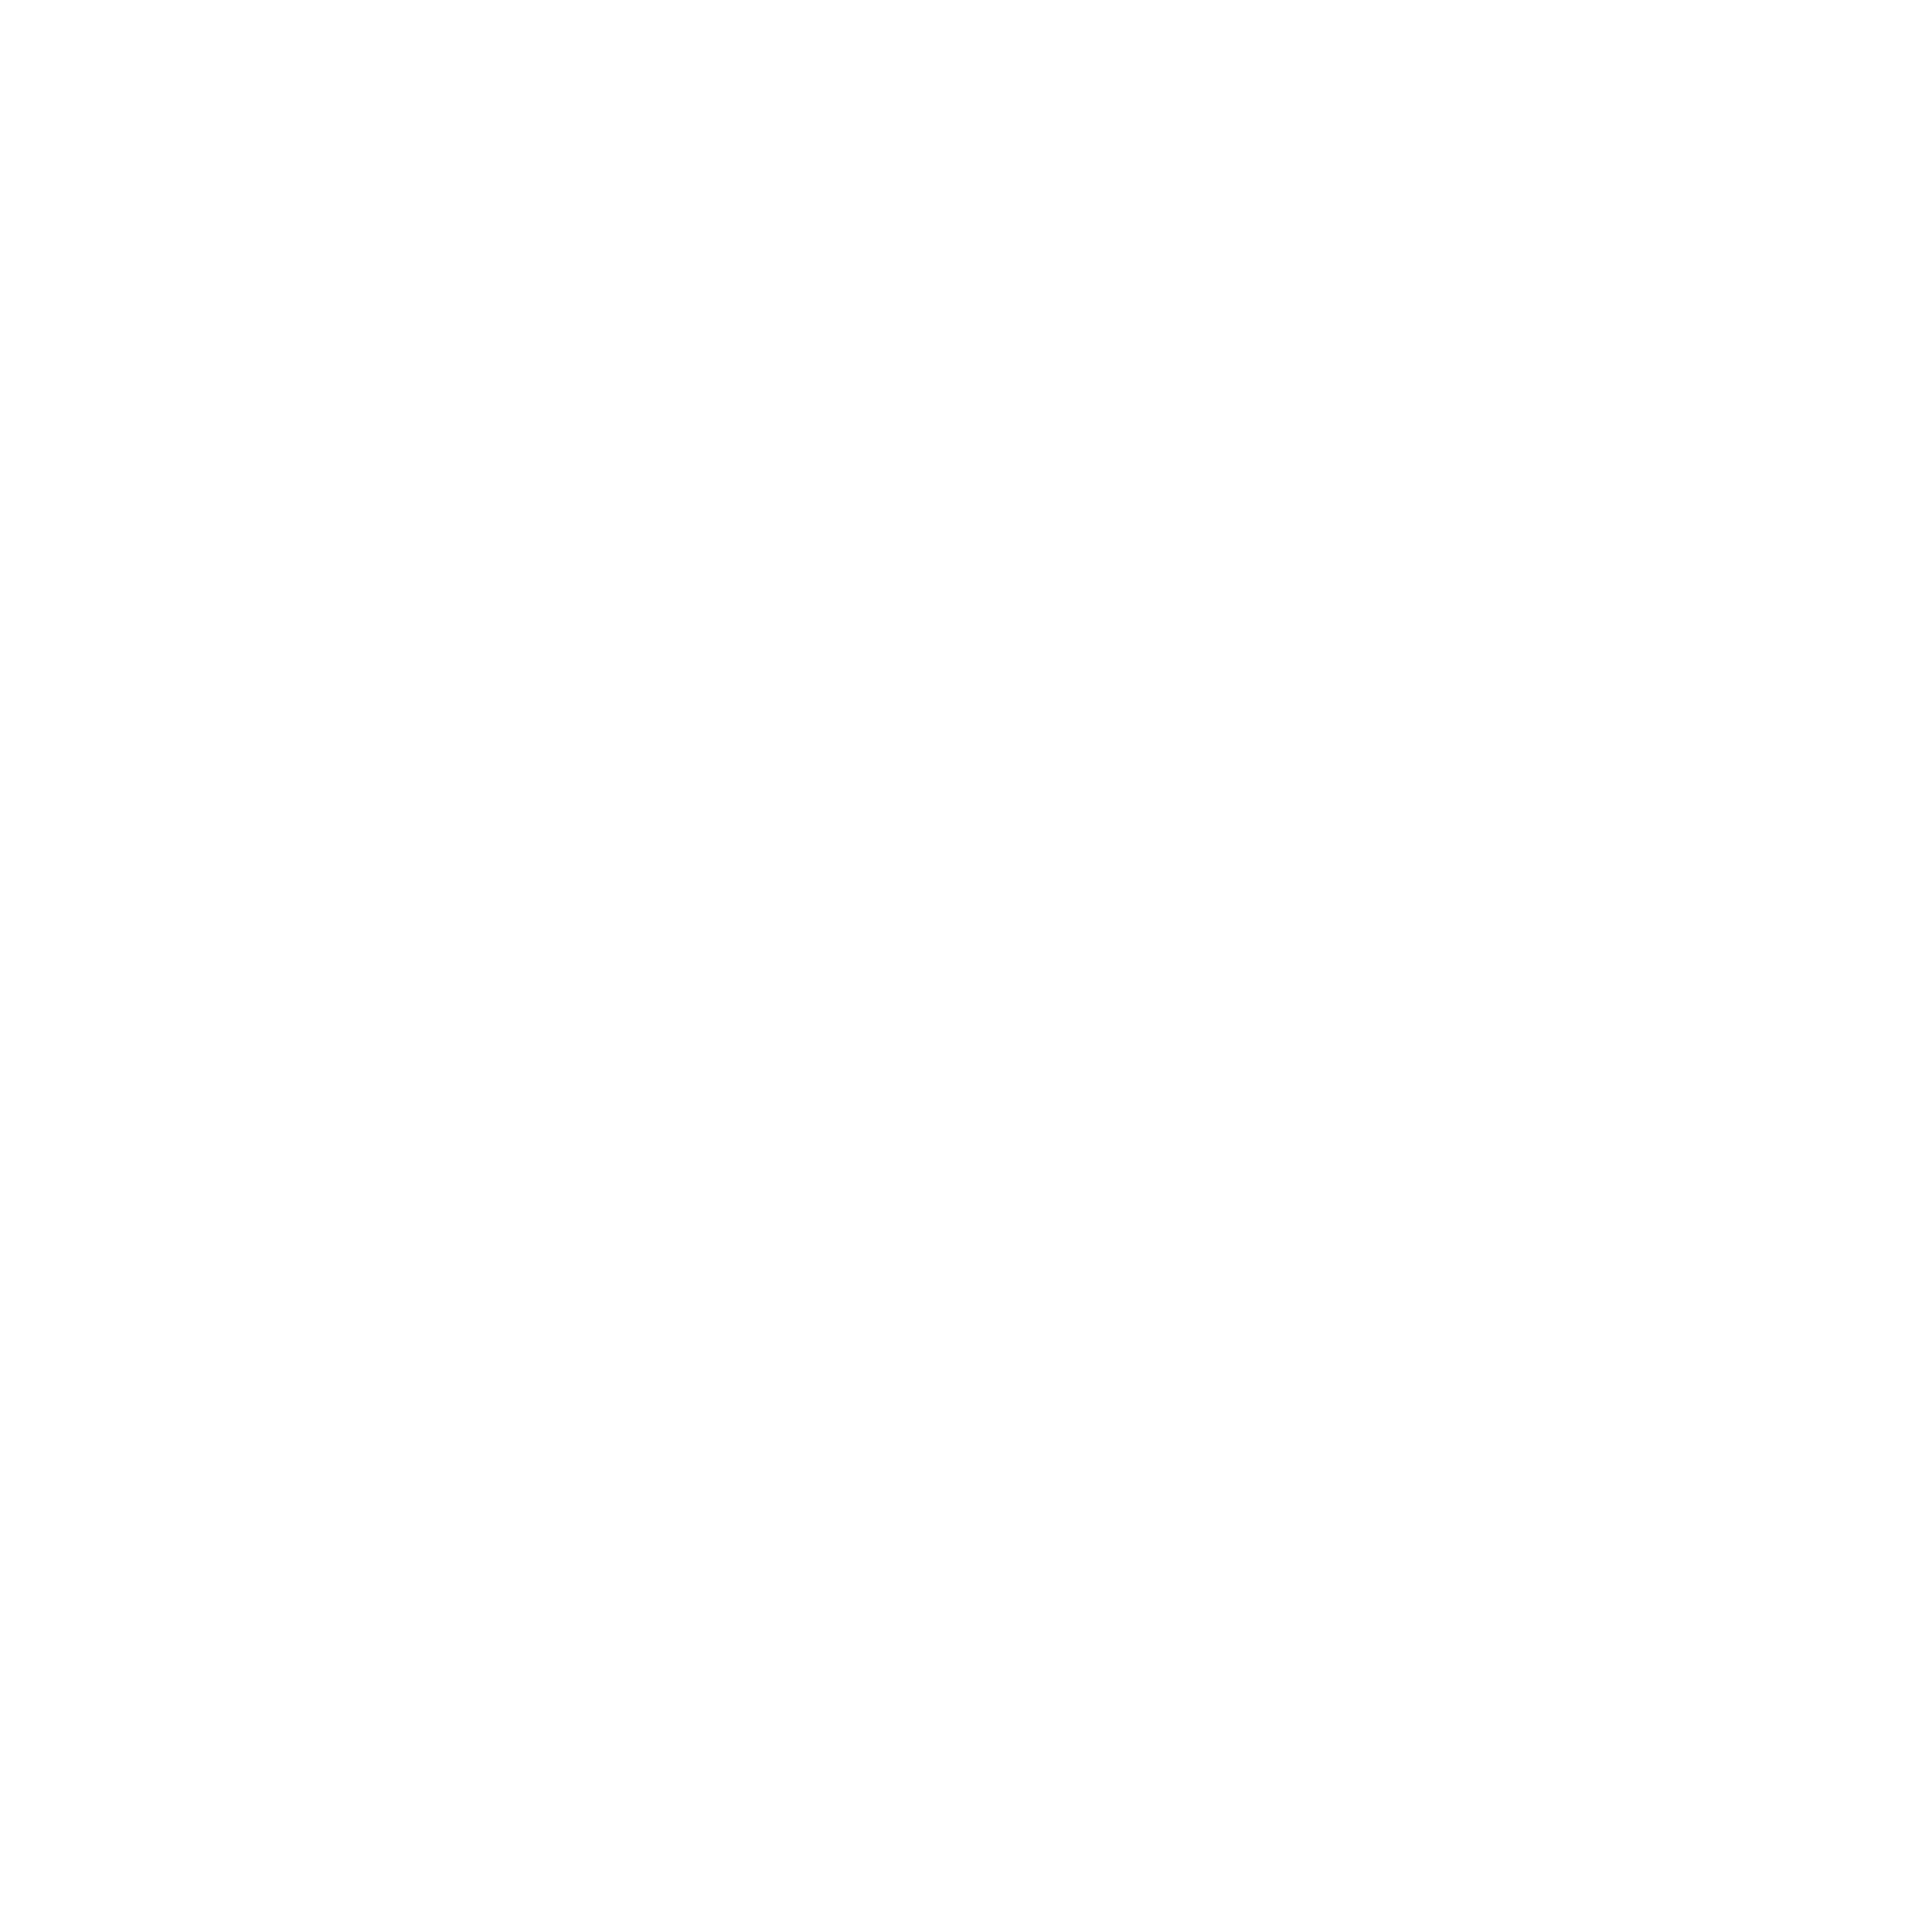 conoco-1-logo-png-transparent.png